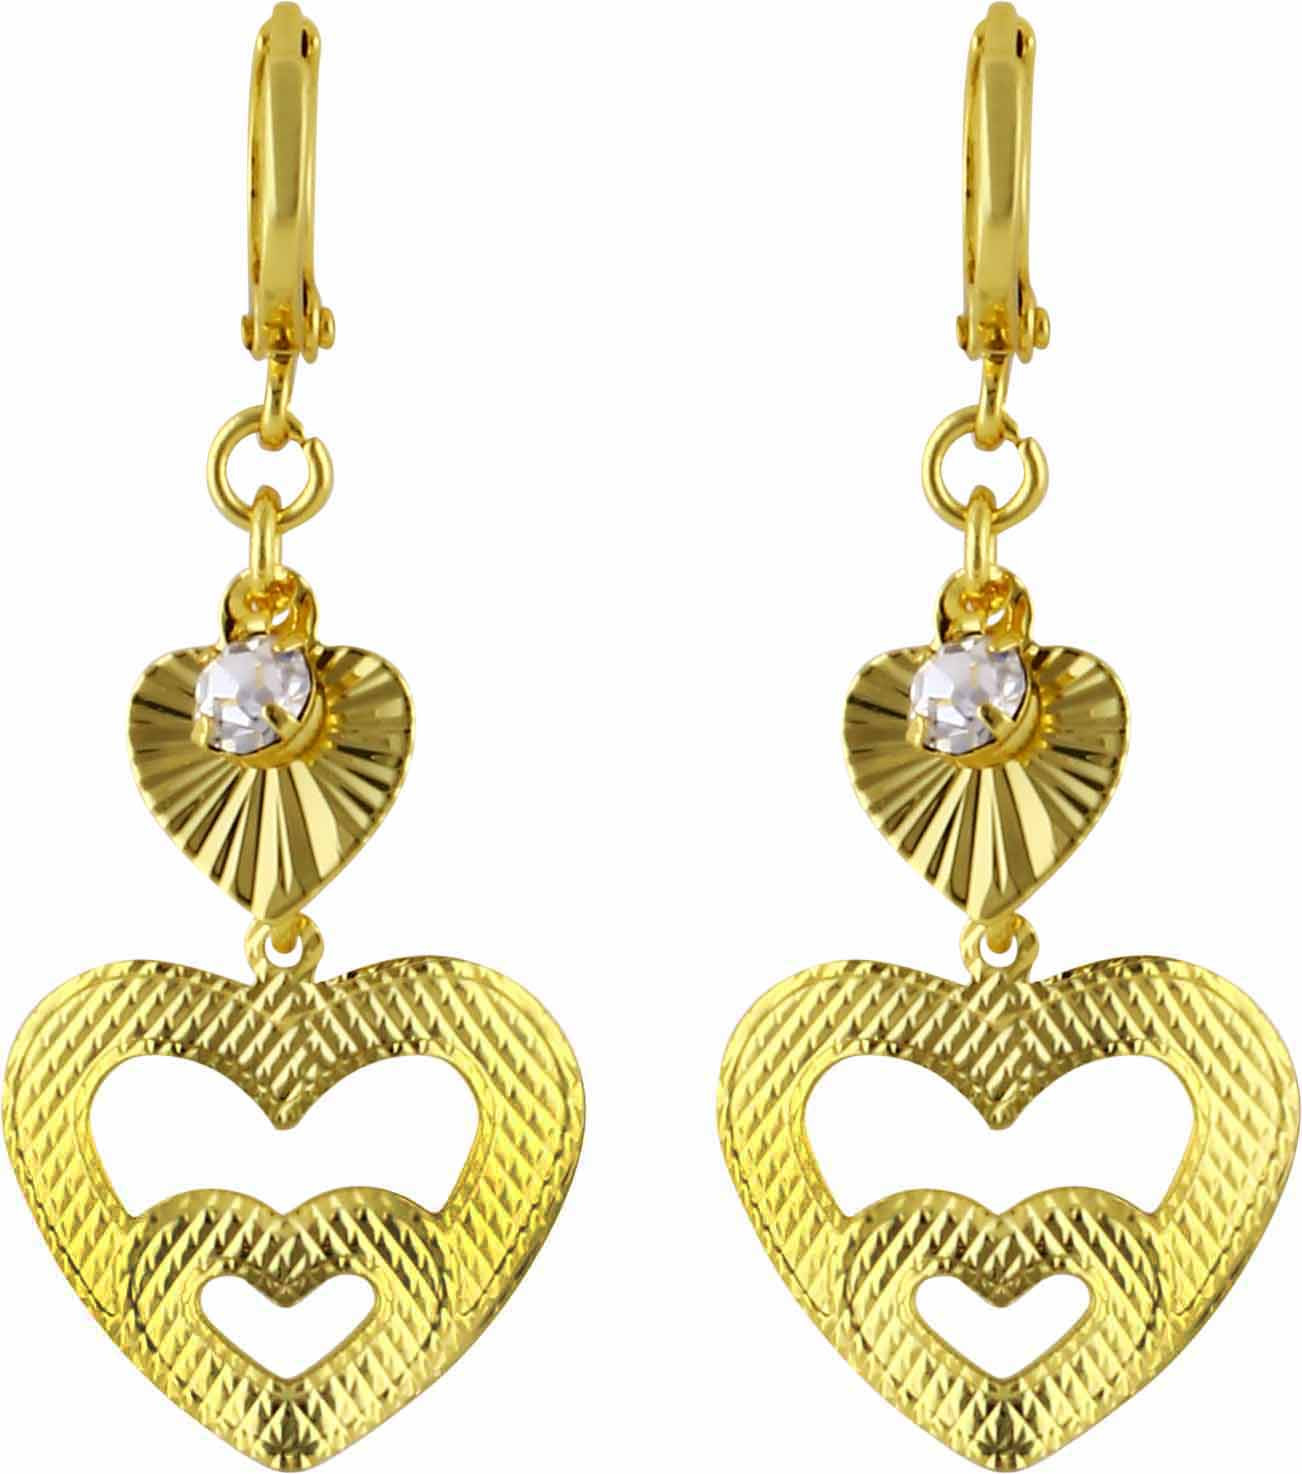 Buy 18K Gold Plated Heart Shape Necklace - MJ067 Gold ...